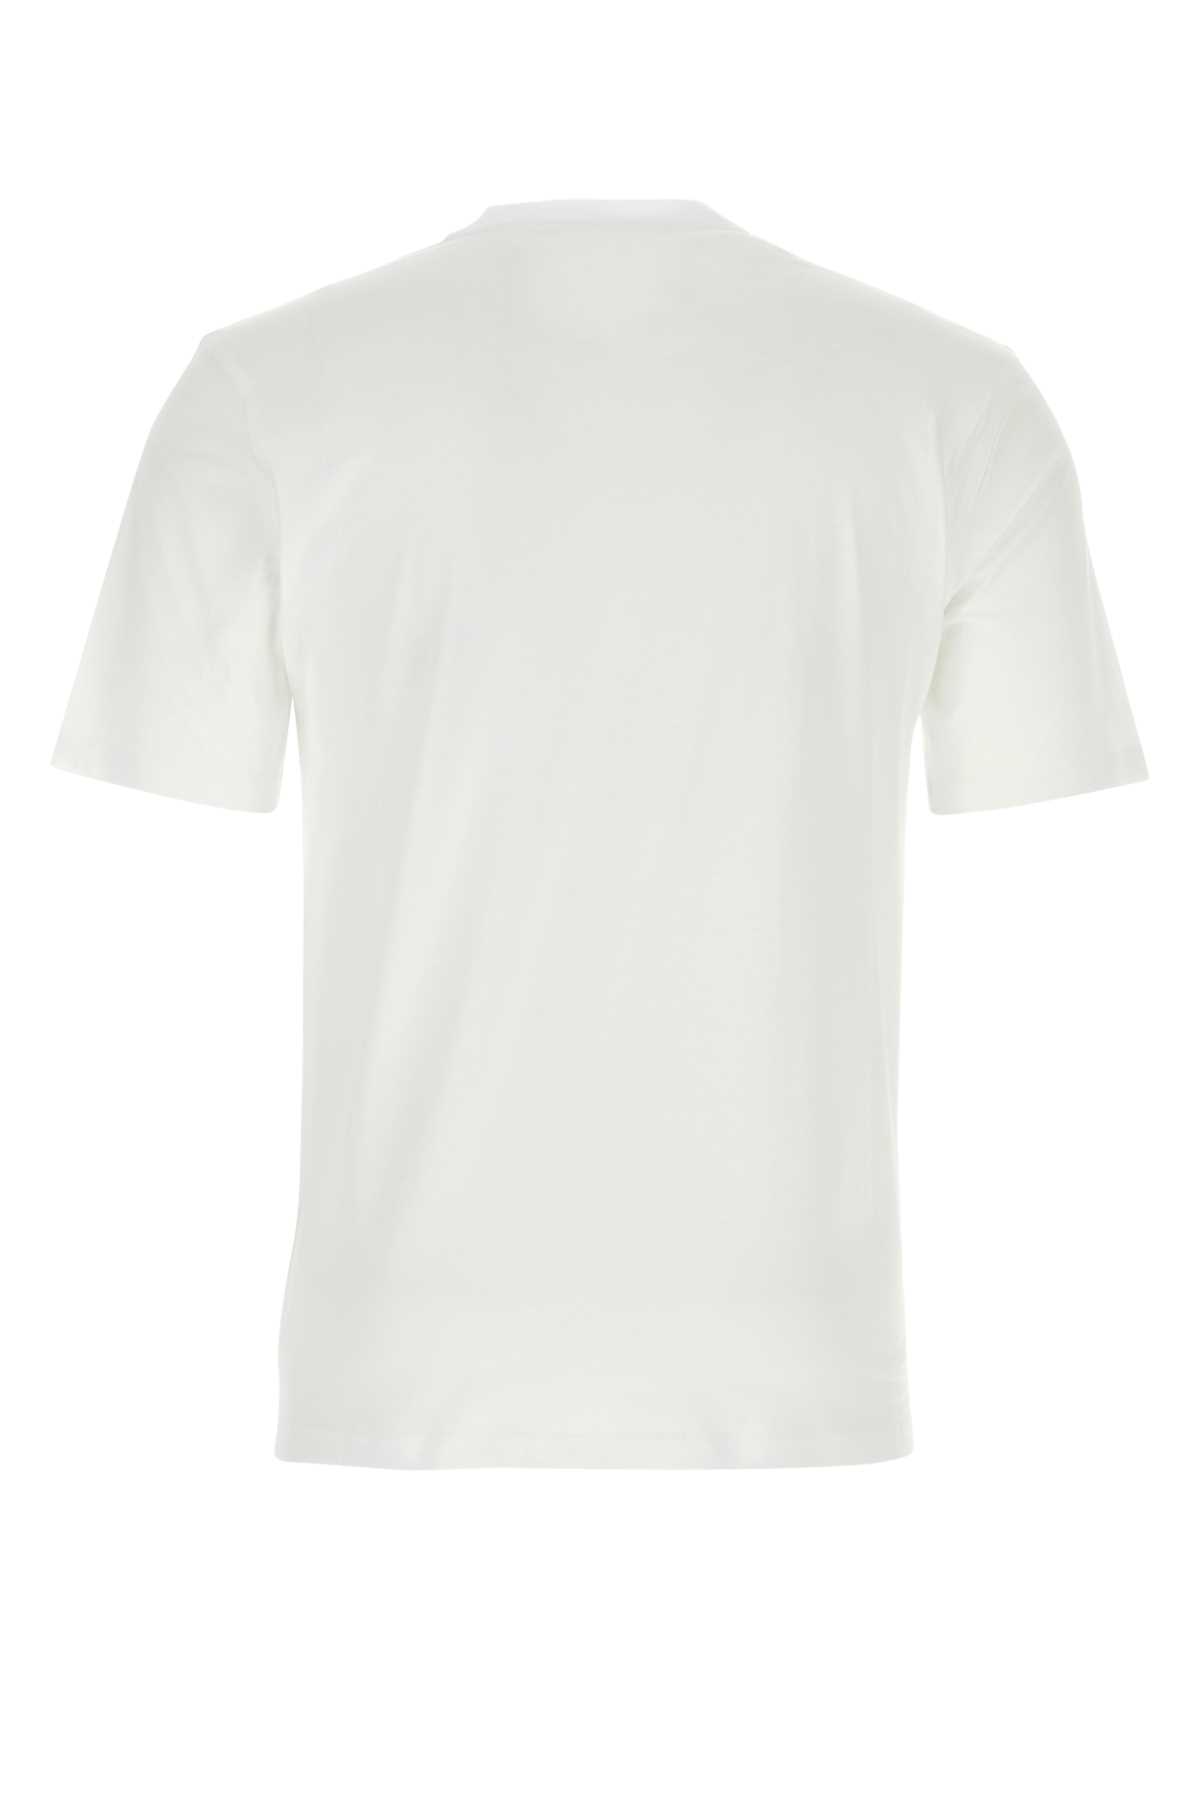 Moschino White Cotton T-shirt In 1001